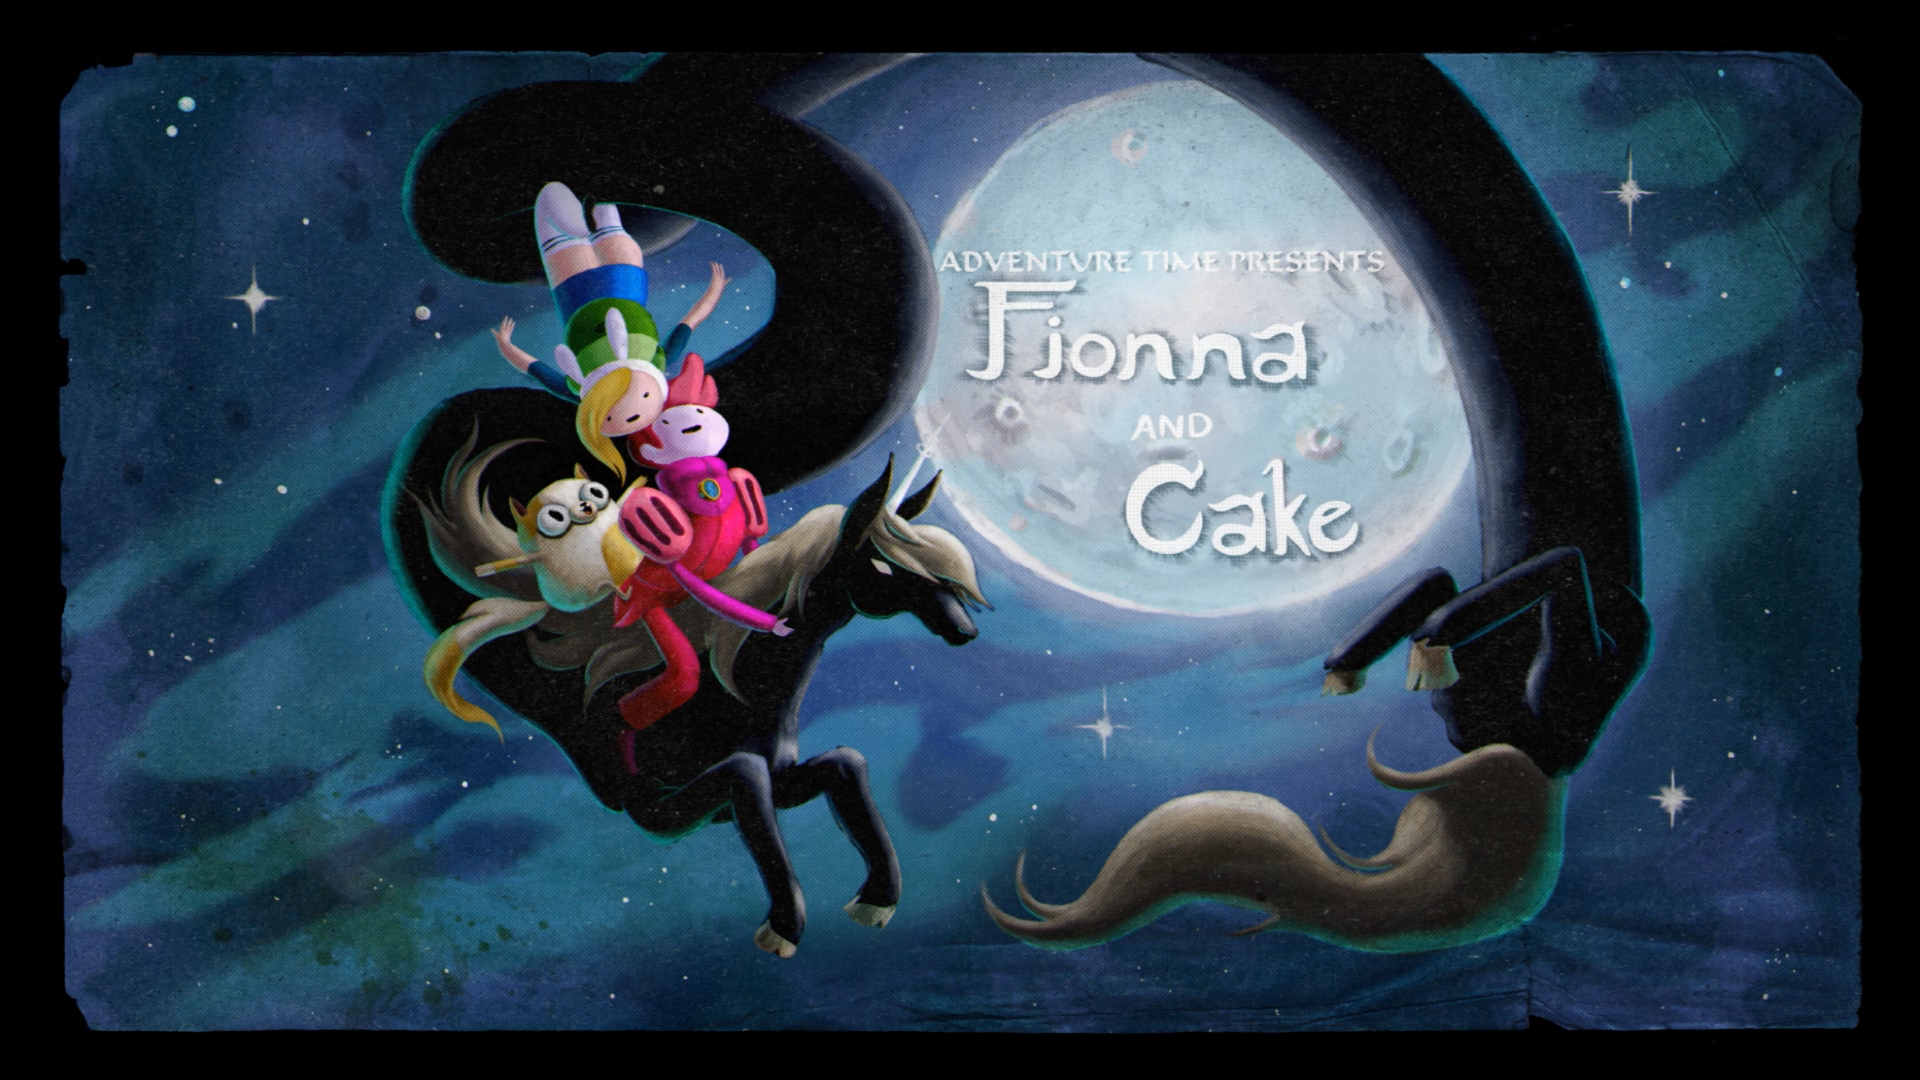 Cheers (S01 E10), Adventure Time: Fionna & Cake